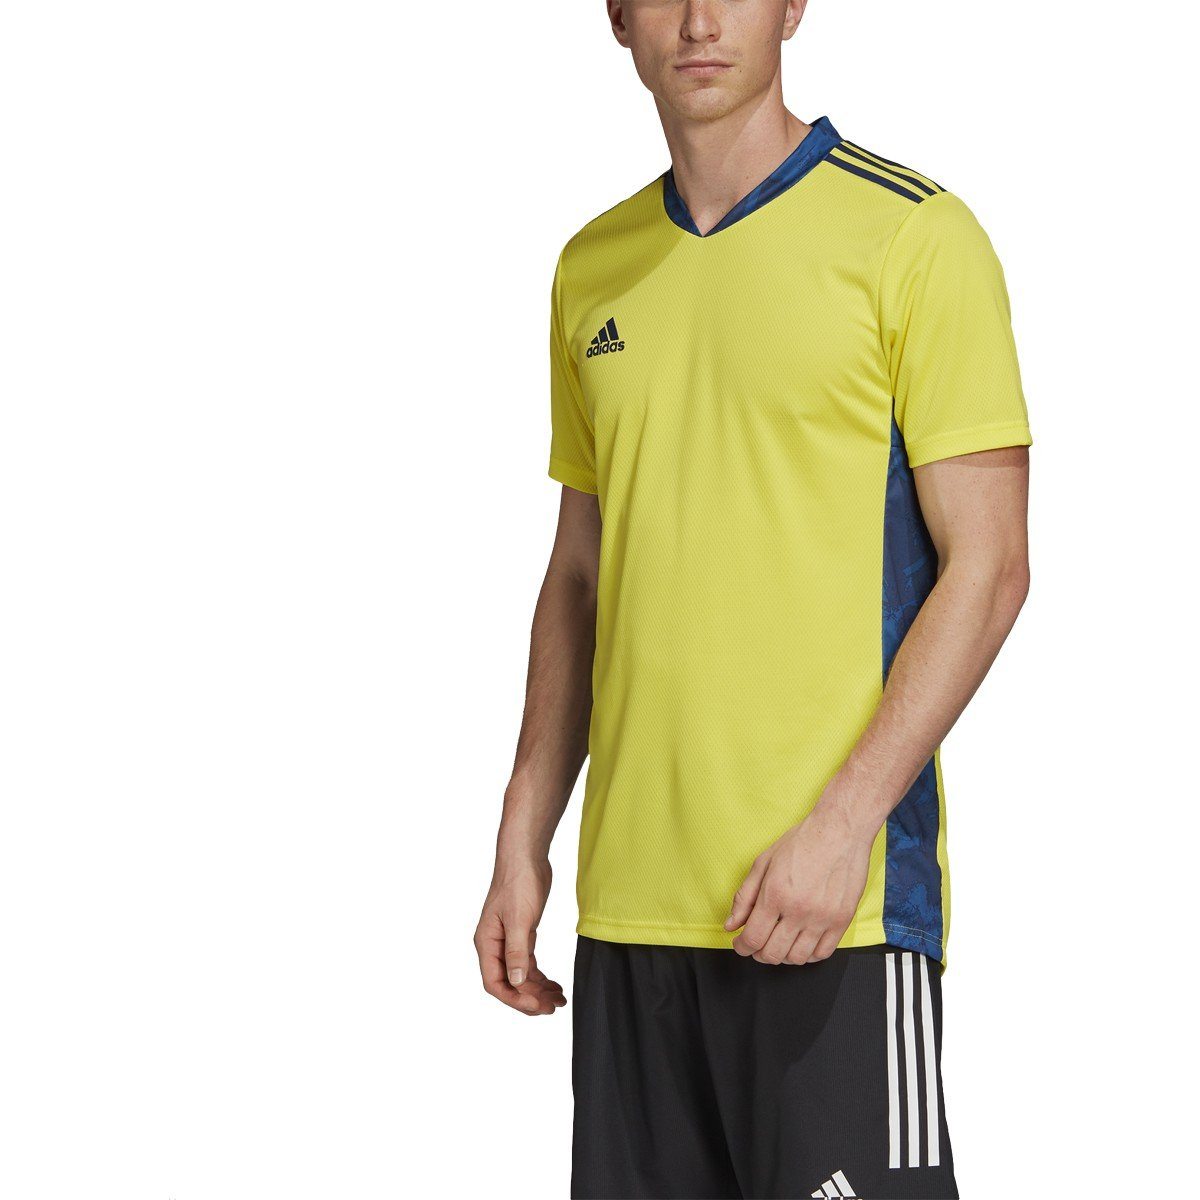 adidas Adipro 20 Short Sleeve Goalkeeper Jersey | FI4207 Jersey Adidas Adult Small SHOCK YELLOW/TEAM NAVY BLUE 